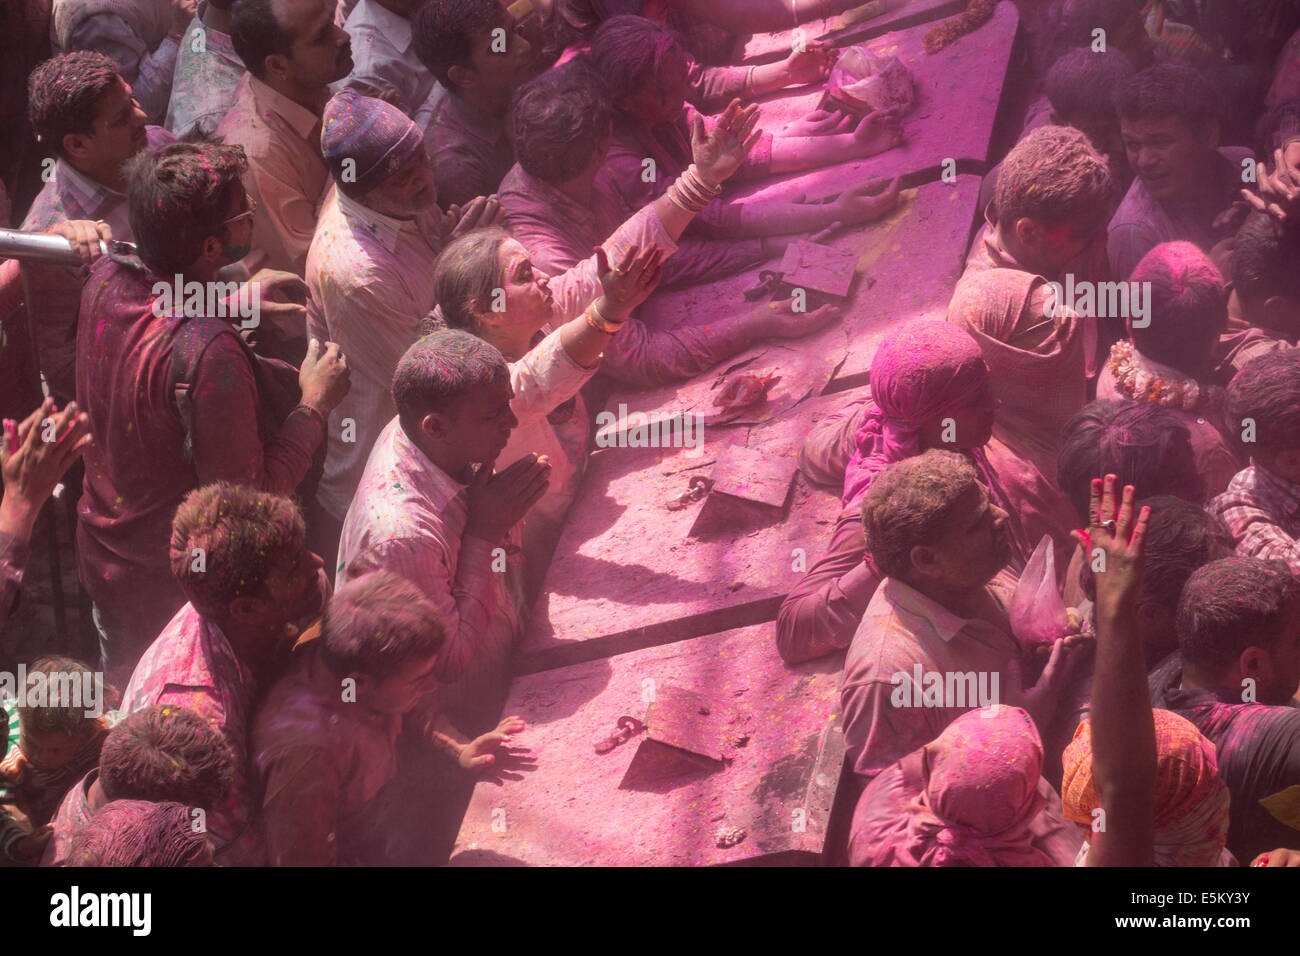 Devotees covered in coloured powder praying, Holi festival, Banke Bihari Temple, Vrindavan, Uttar Pradesh, India Stock Photo